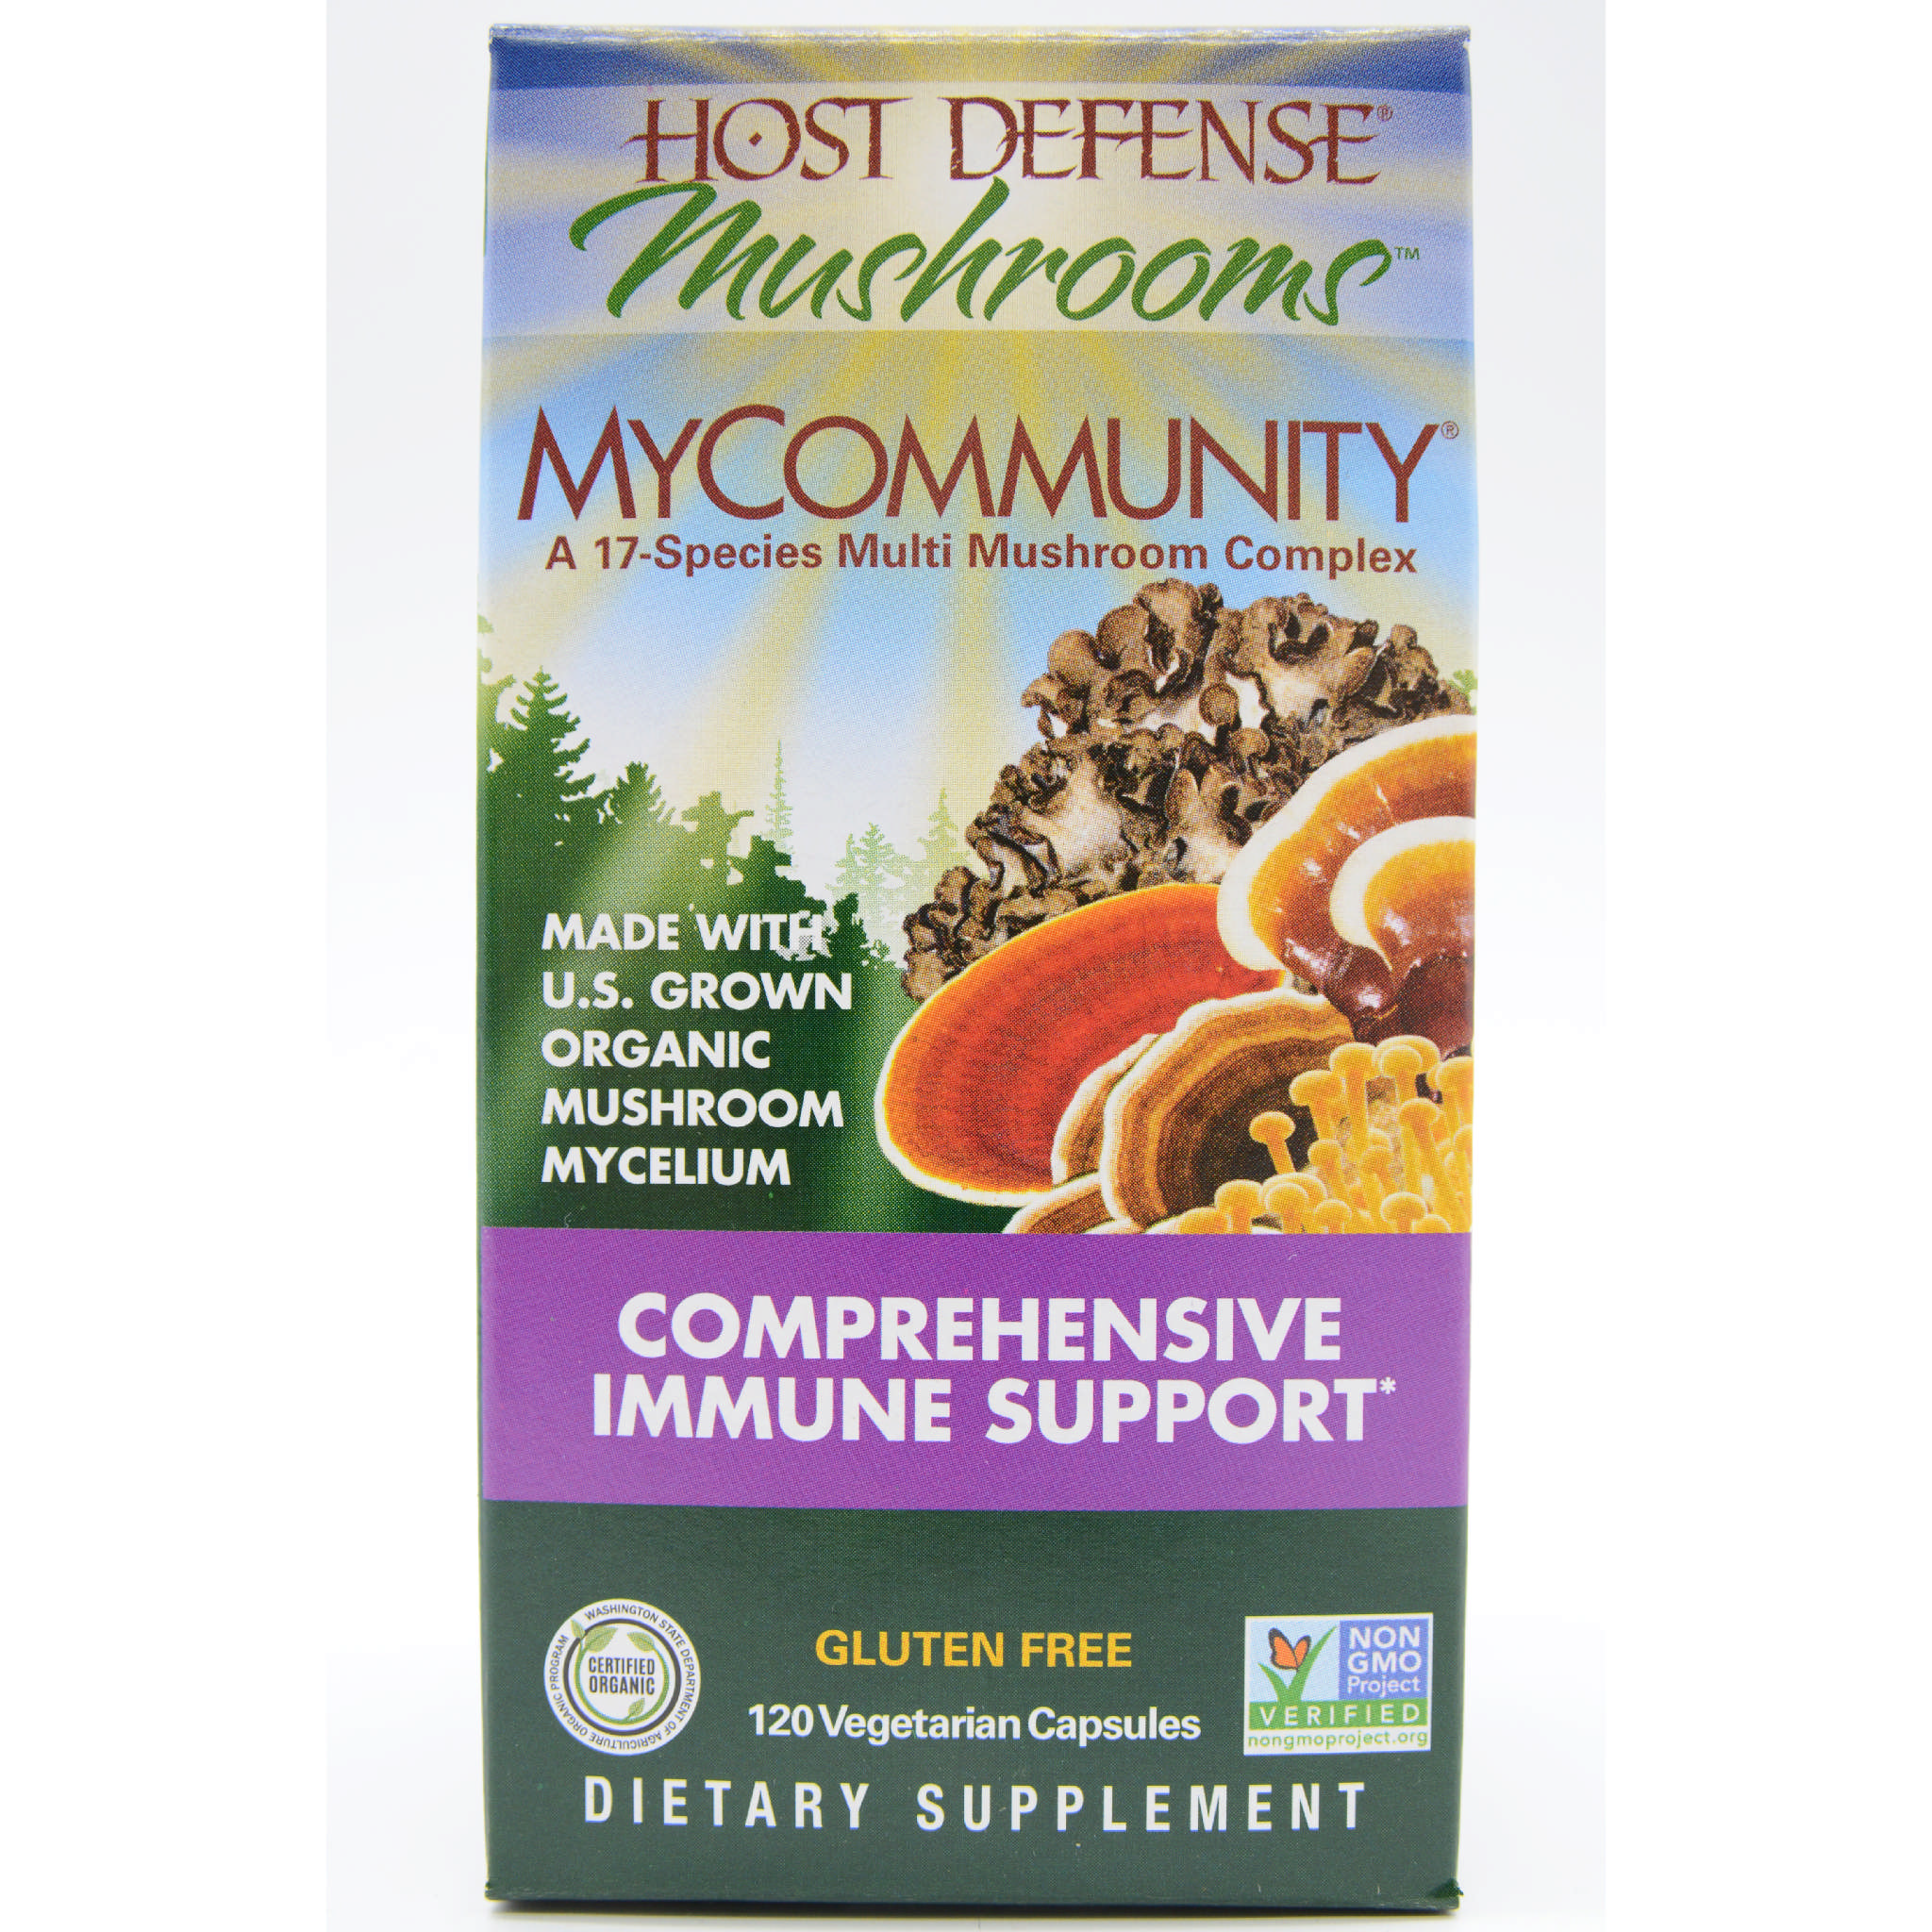 Fungi Perfecti - Mycommunity Host Defense